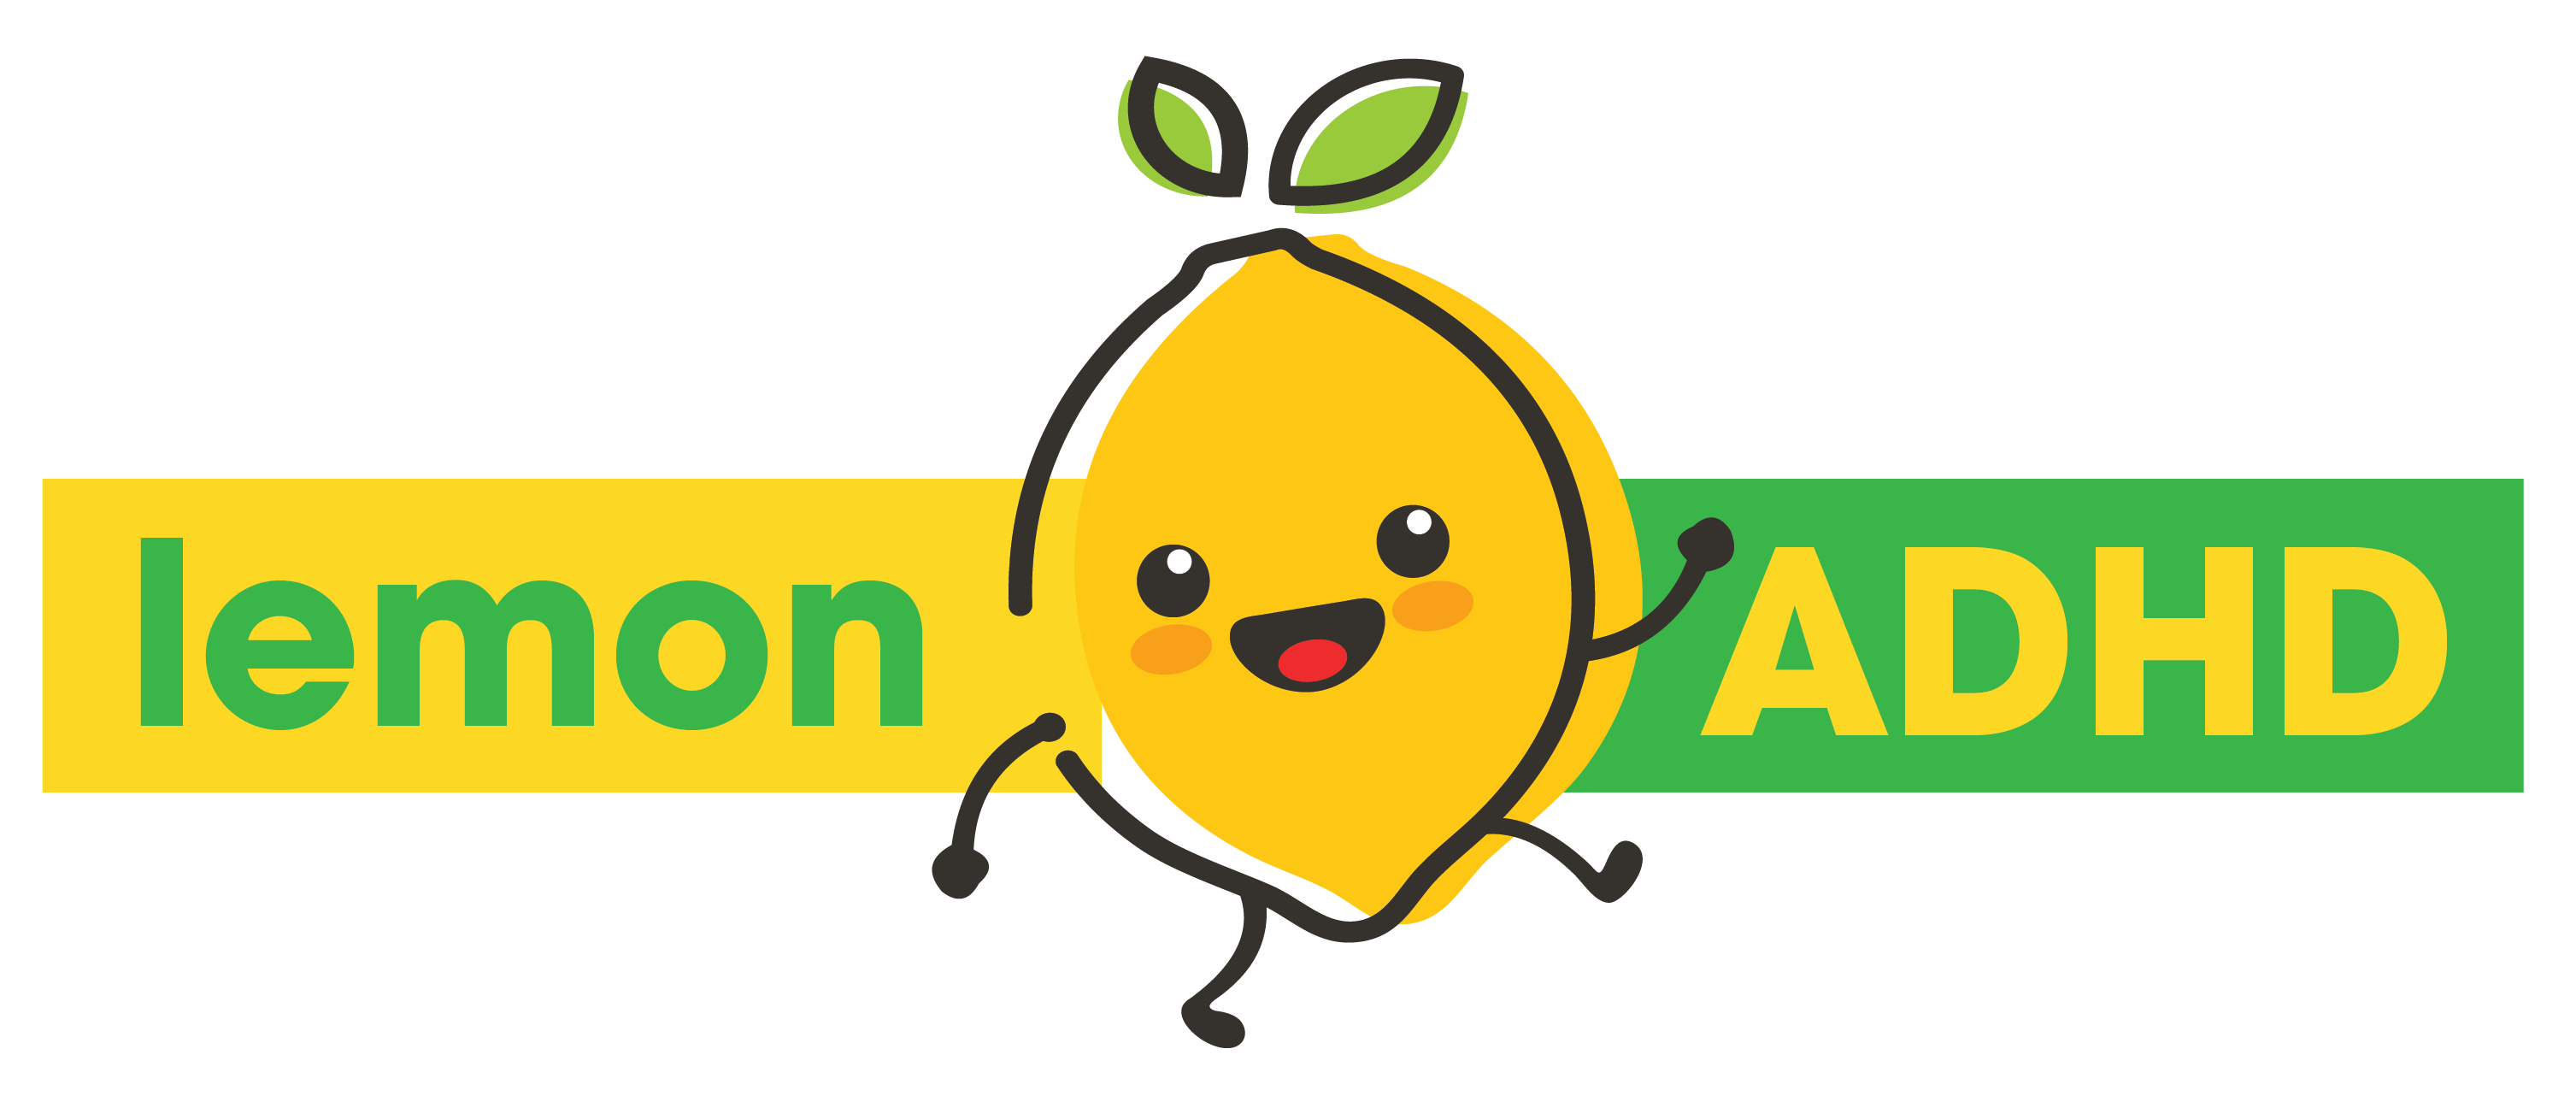 Lemon ADHD